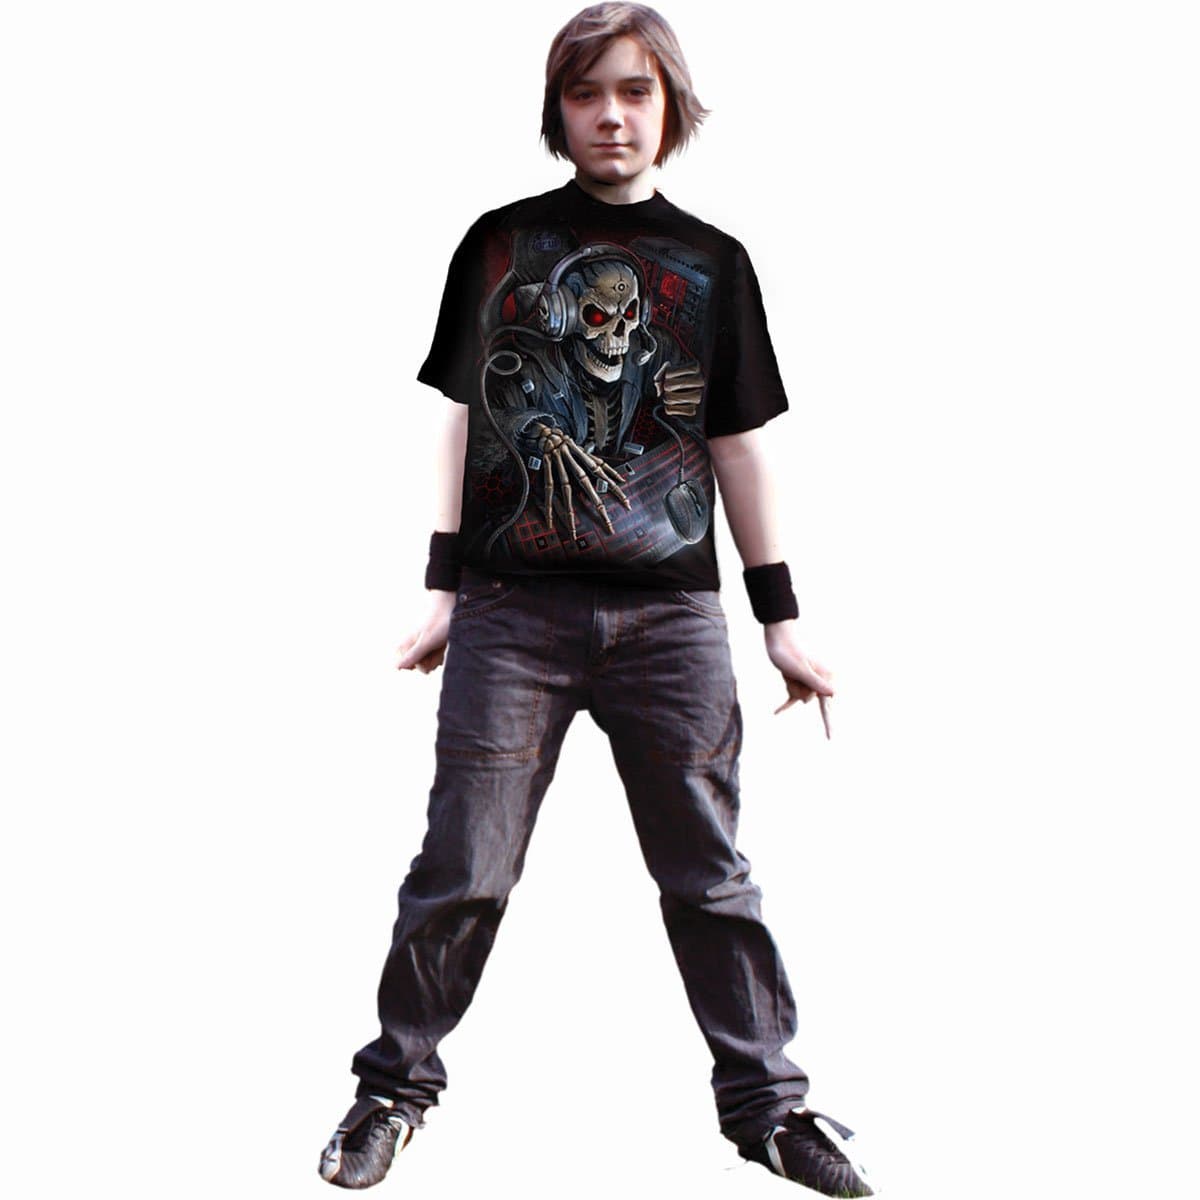 PC GAMER - Kids T-Shirt Black - Spiral USA